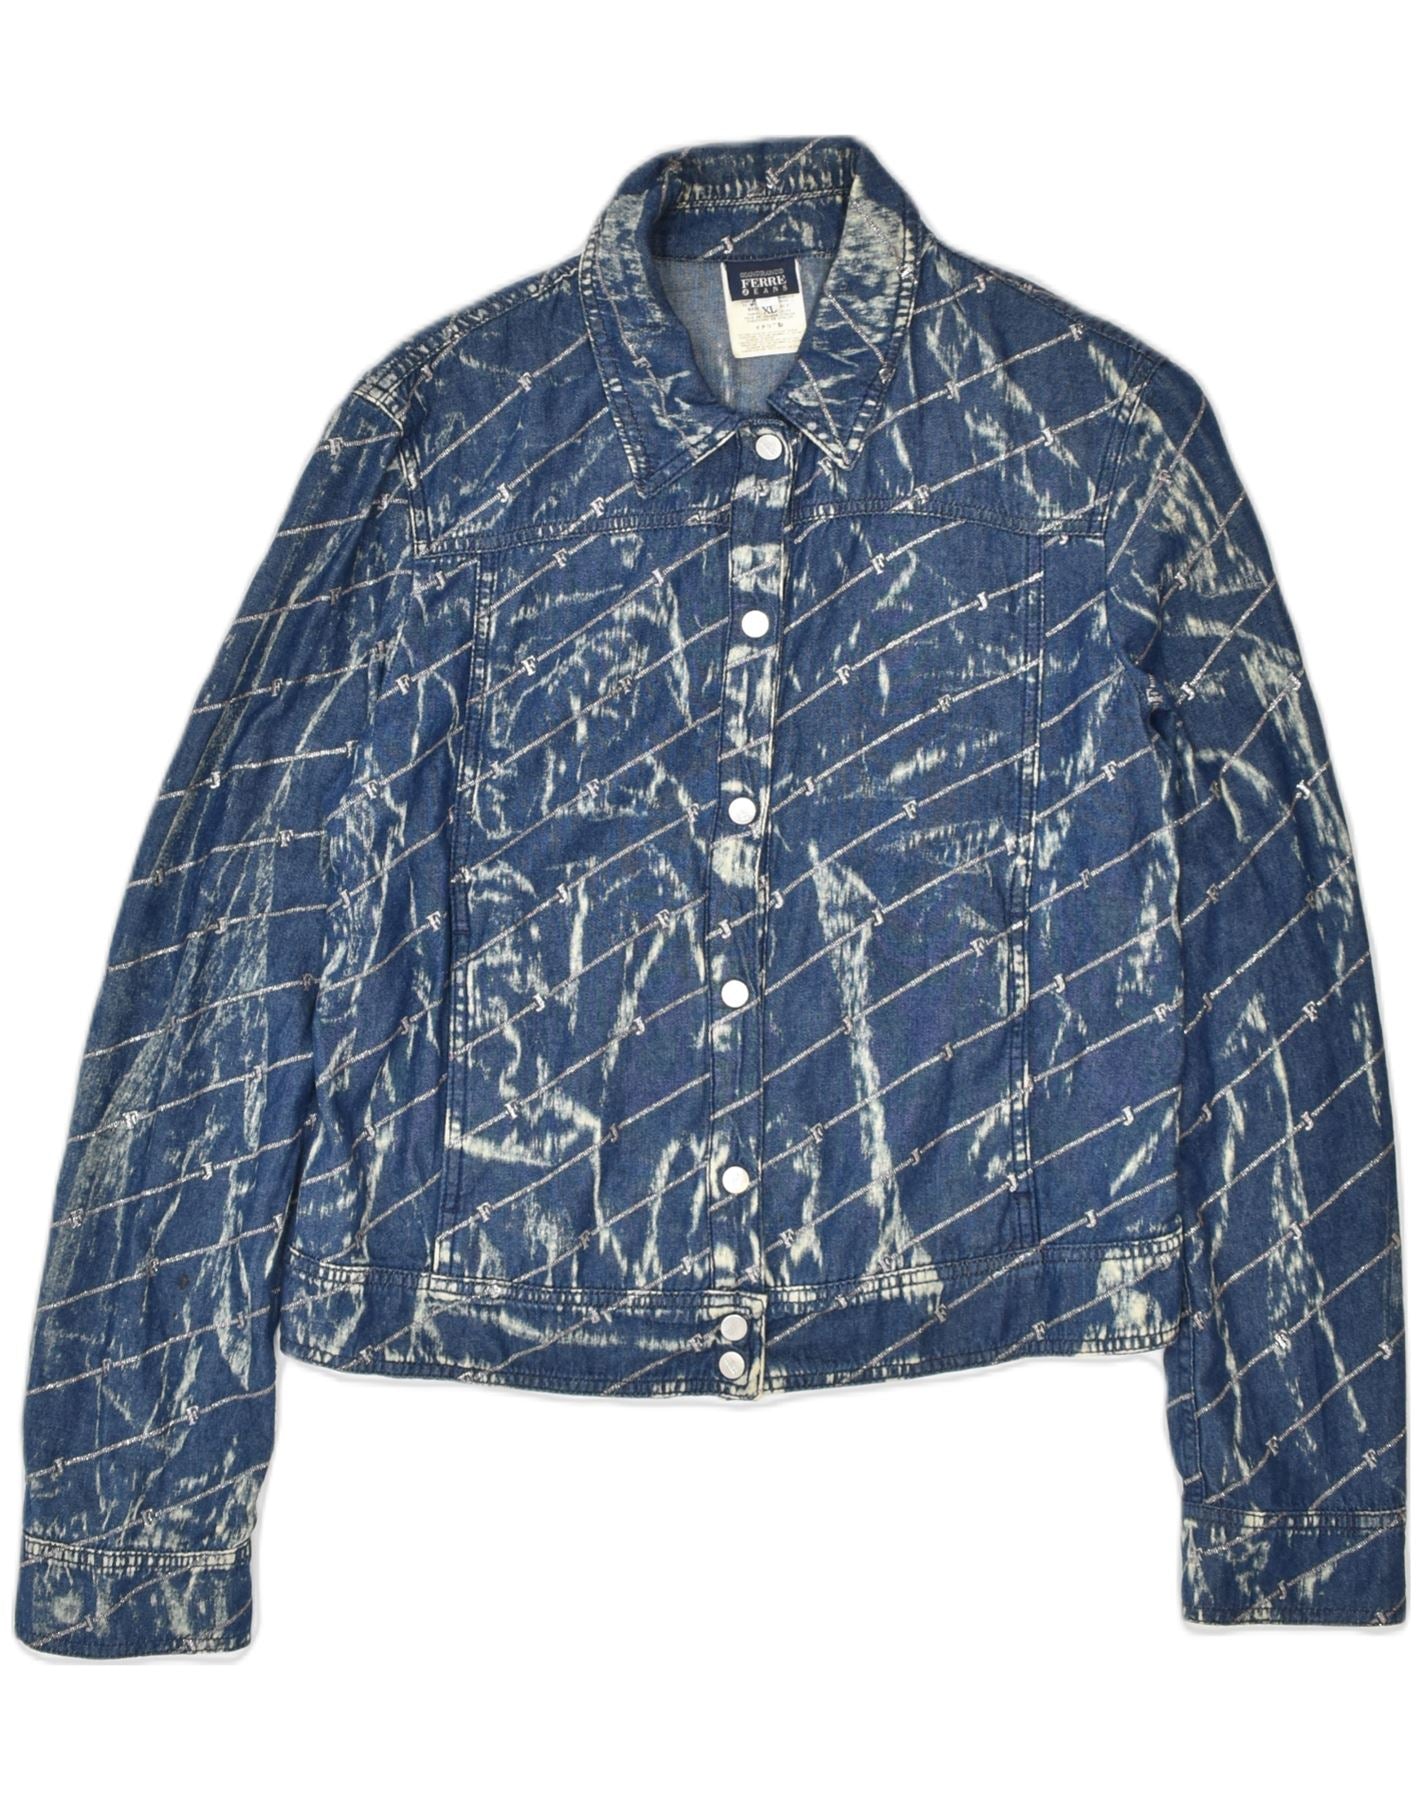 VINTAGE denim jean jacket wolf print pockets oversized graphic print image  trim | Vintage denim jeans, Vintage denim, Fur lined denim jacket